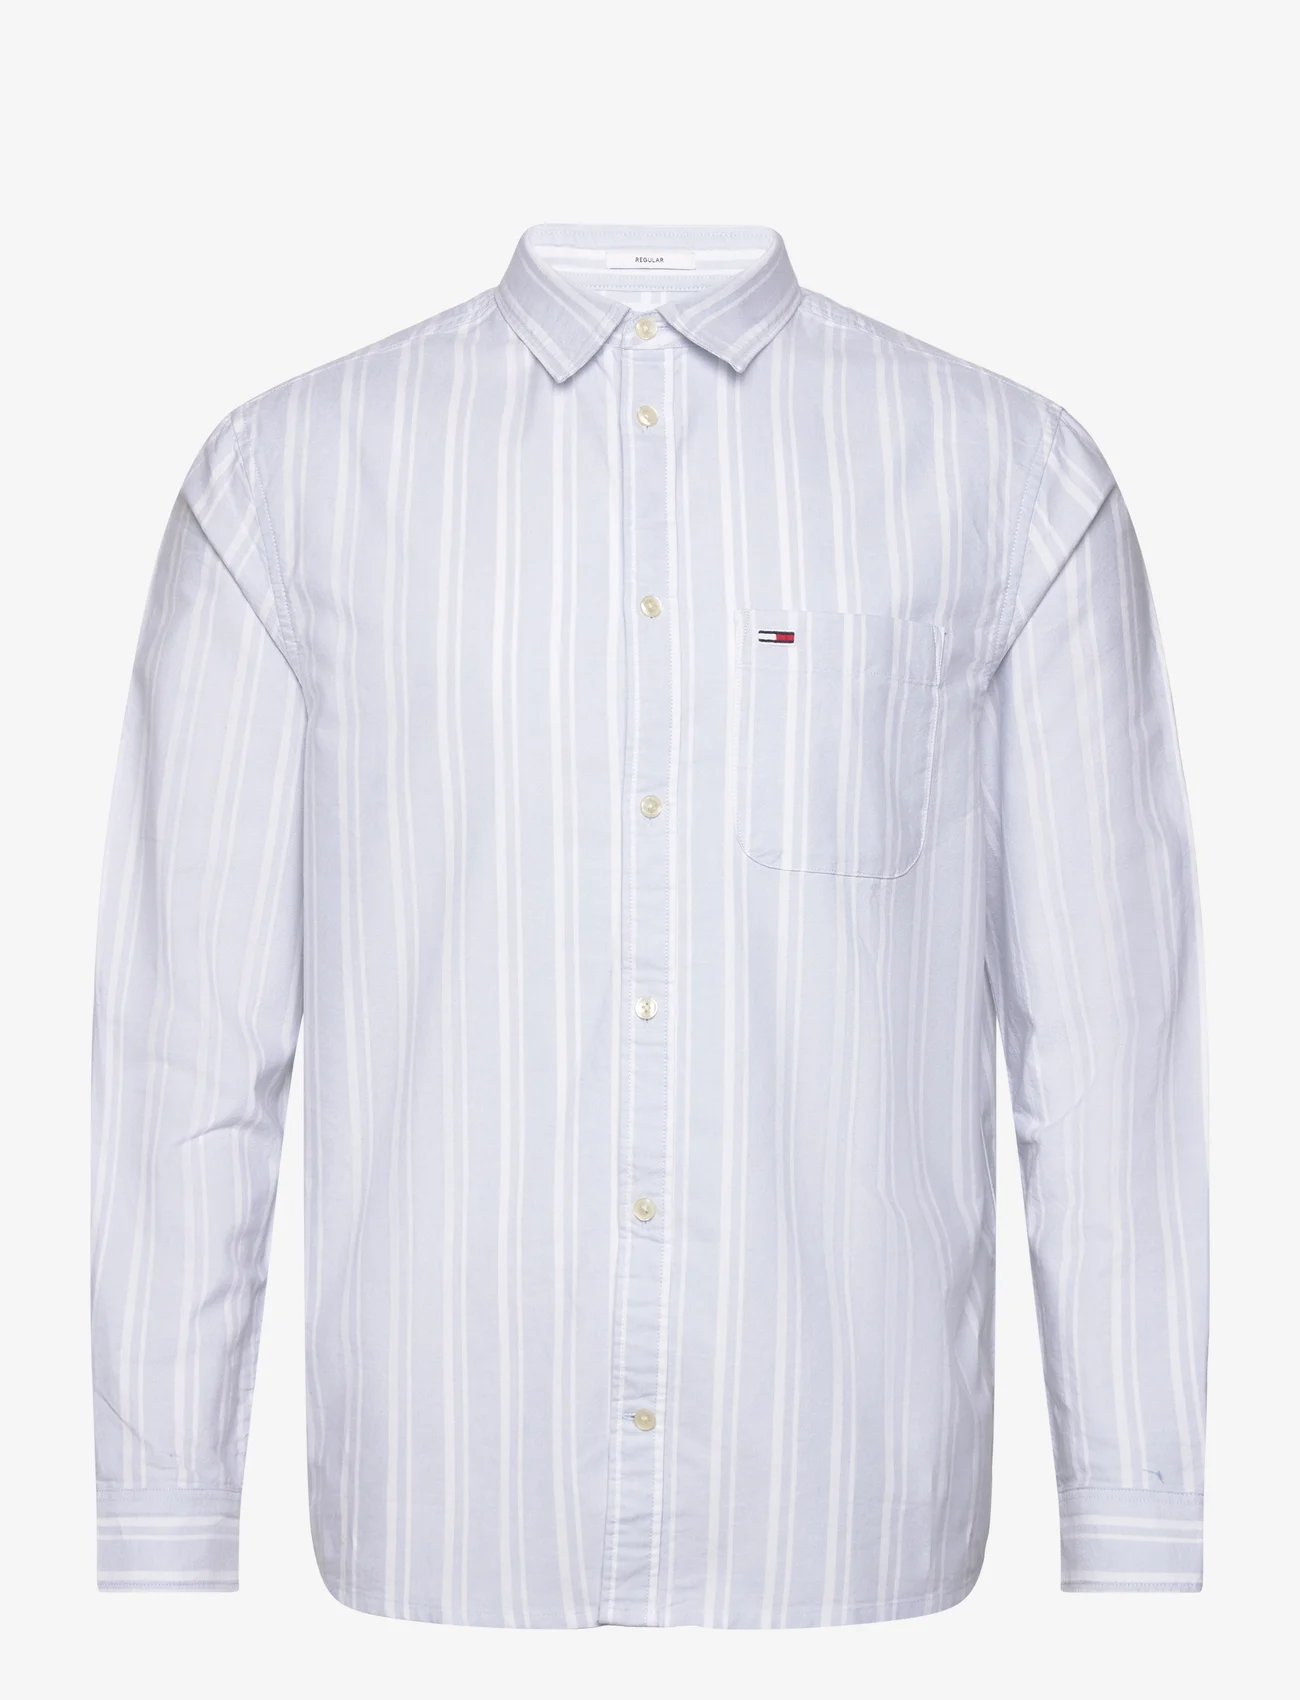 Tommy Jeans - TJM REG OXFORD STRIPE SHIRT - oxford shirts - breezy blue stripe - 0